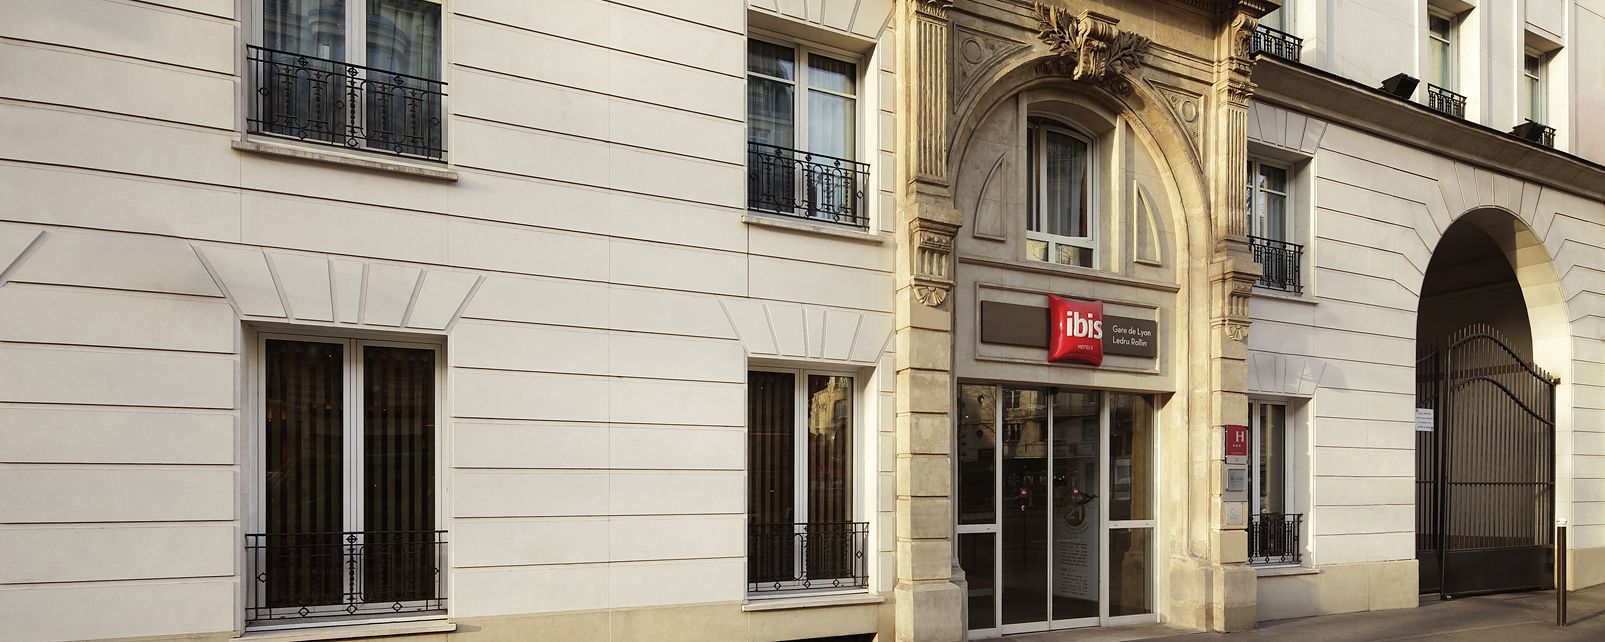 Hotel Ibis Paris Gare de Lyon Ledru Rollin 12ème